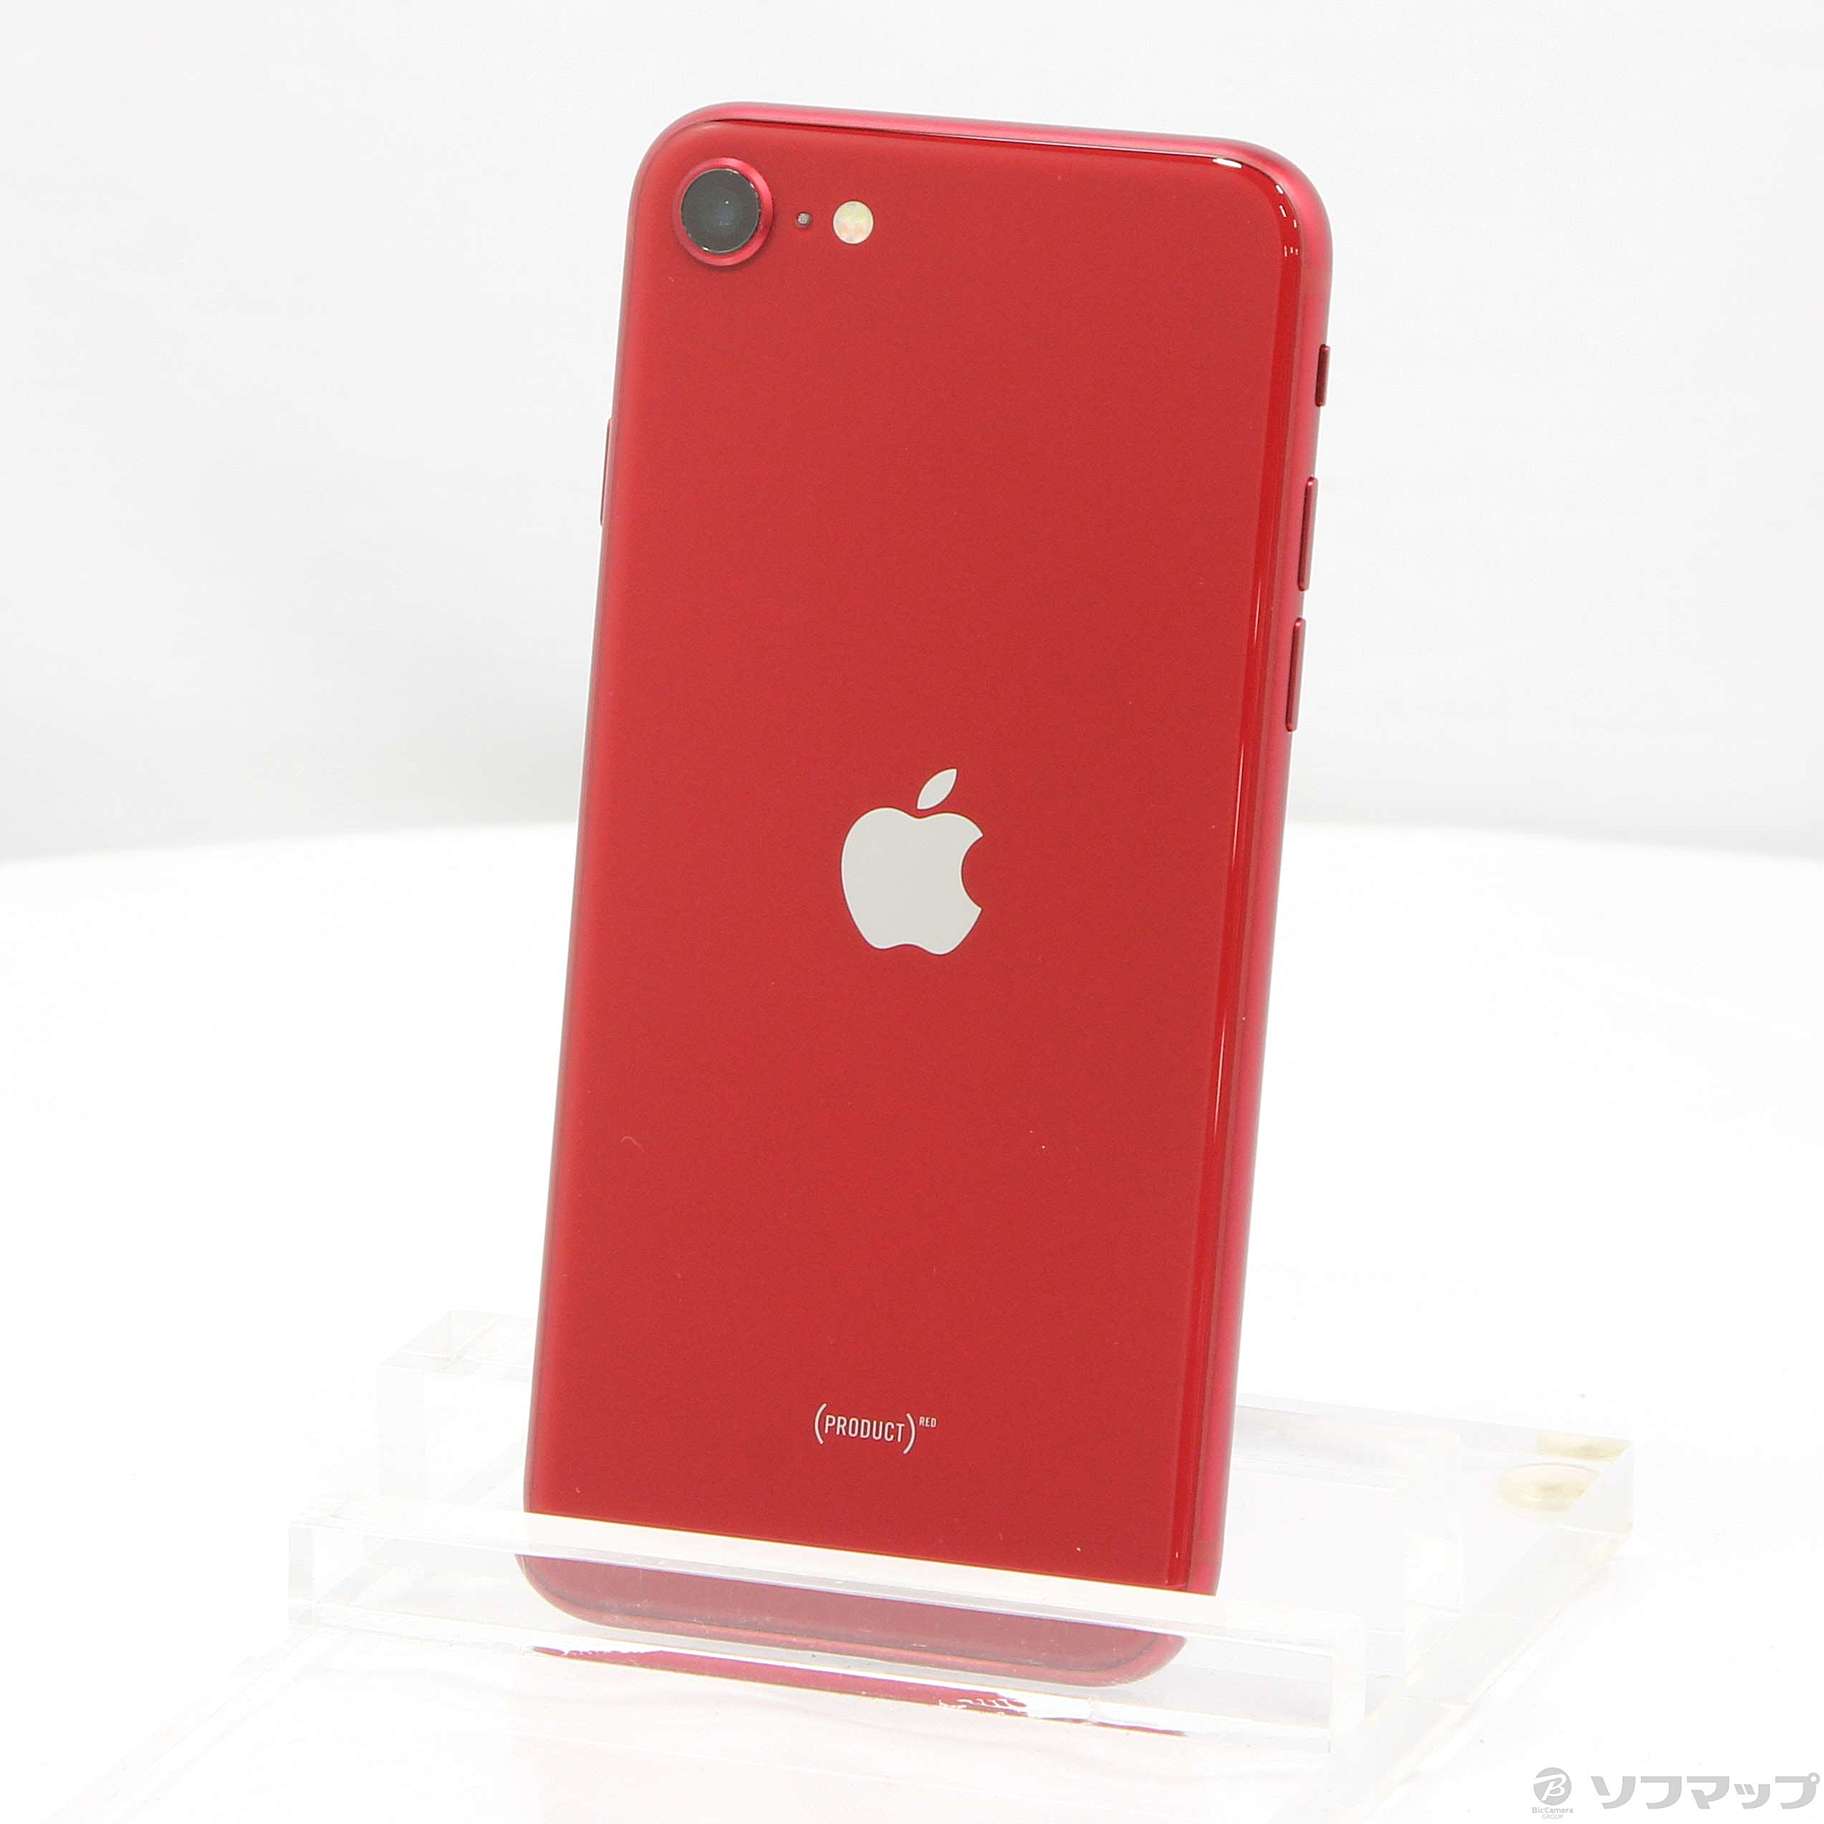 iPhone SE (第3世代) 64GB SIMフリー 中古(白ロム)価格比較 - 価格.com